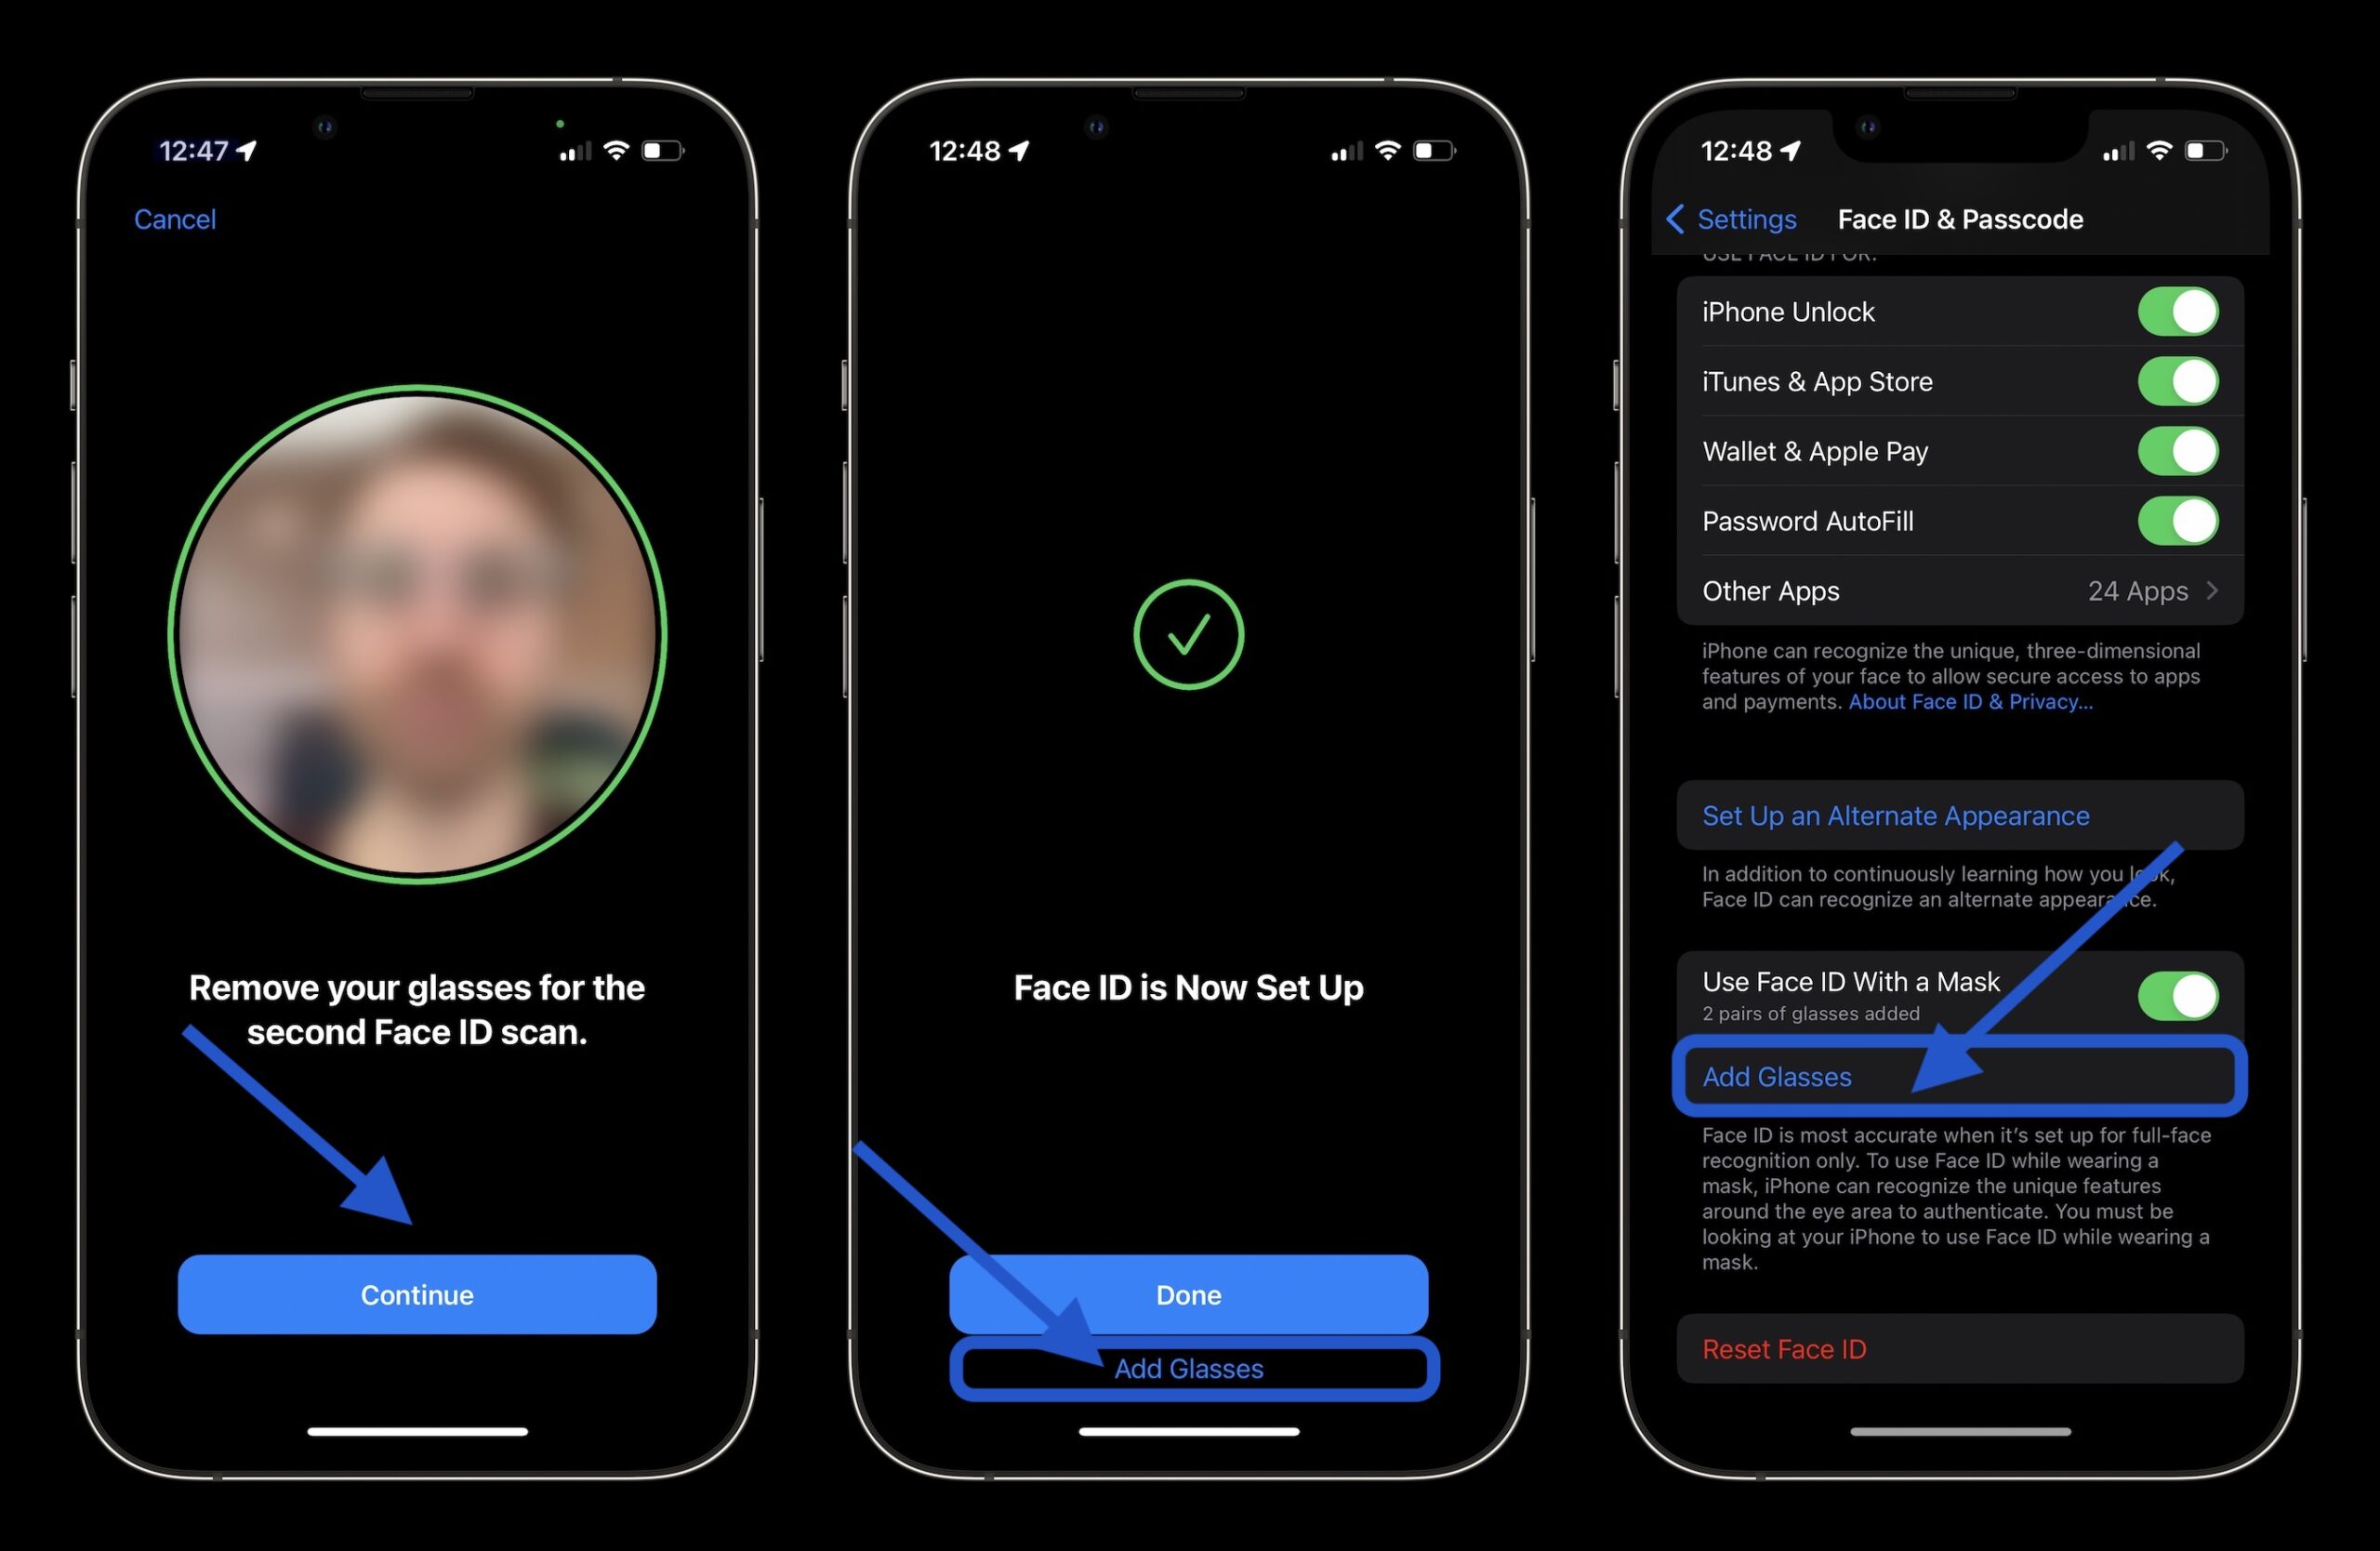 Apple kini merilis iOS 15.4 yang memungkinkan penggunanya untuk membuka Face ID saat memakai masker. Update terbaru ini bisa diunduh pengguna iPhone sejak Senin kemarin.